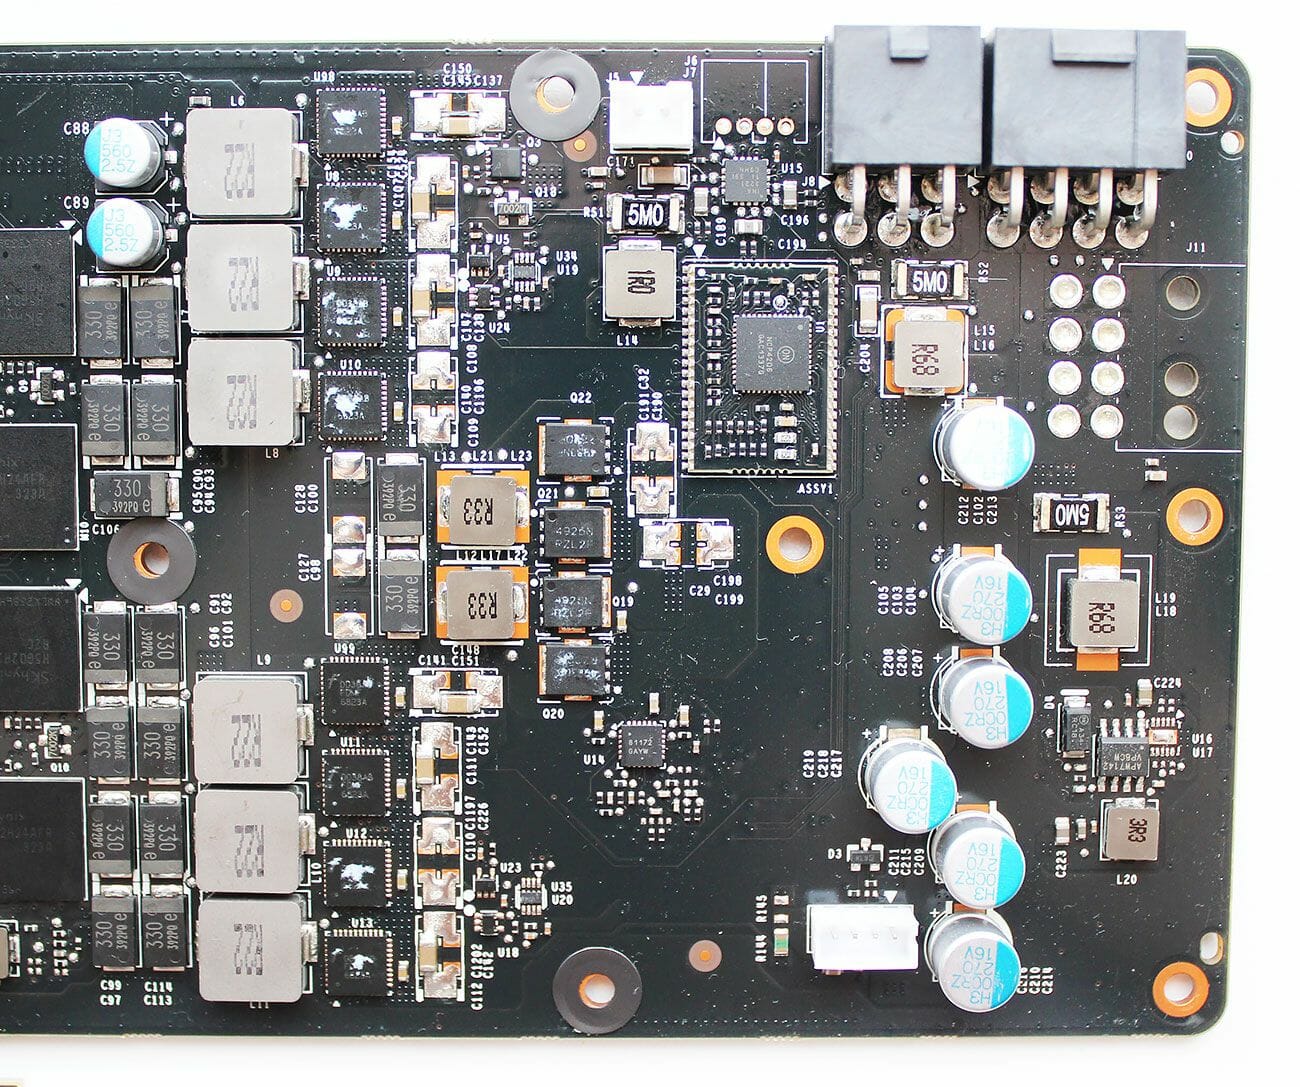 11 ZOTAC GeForce GTX 780 Ti transistors